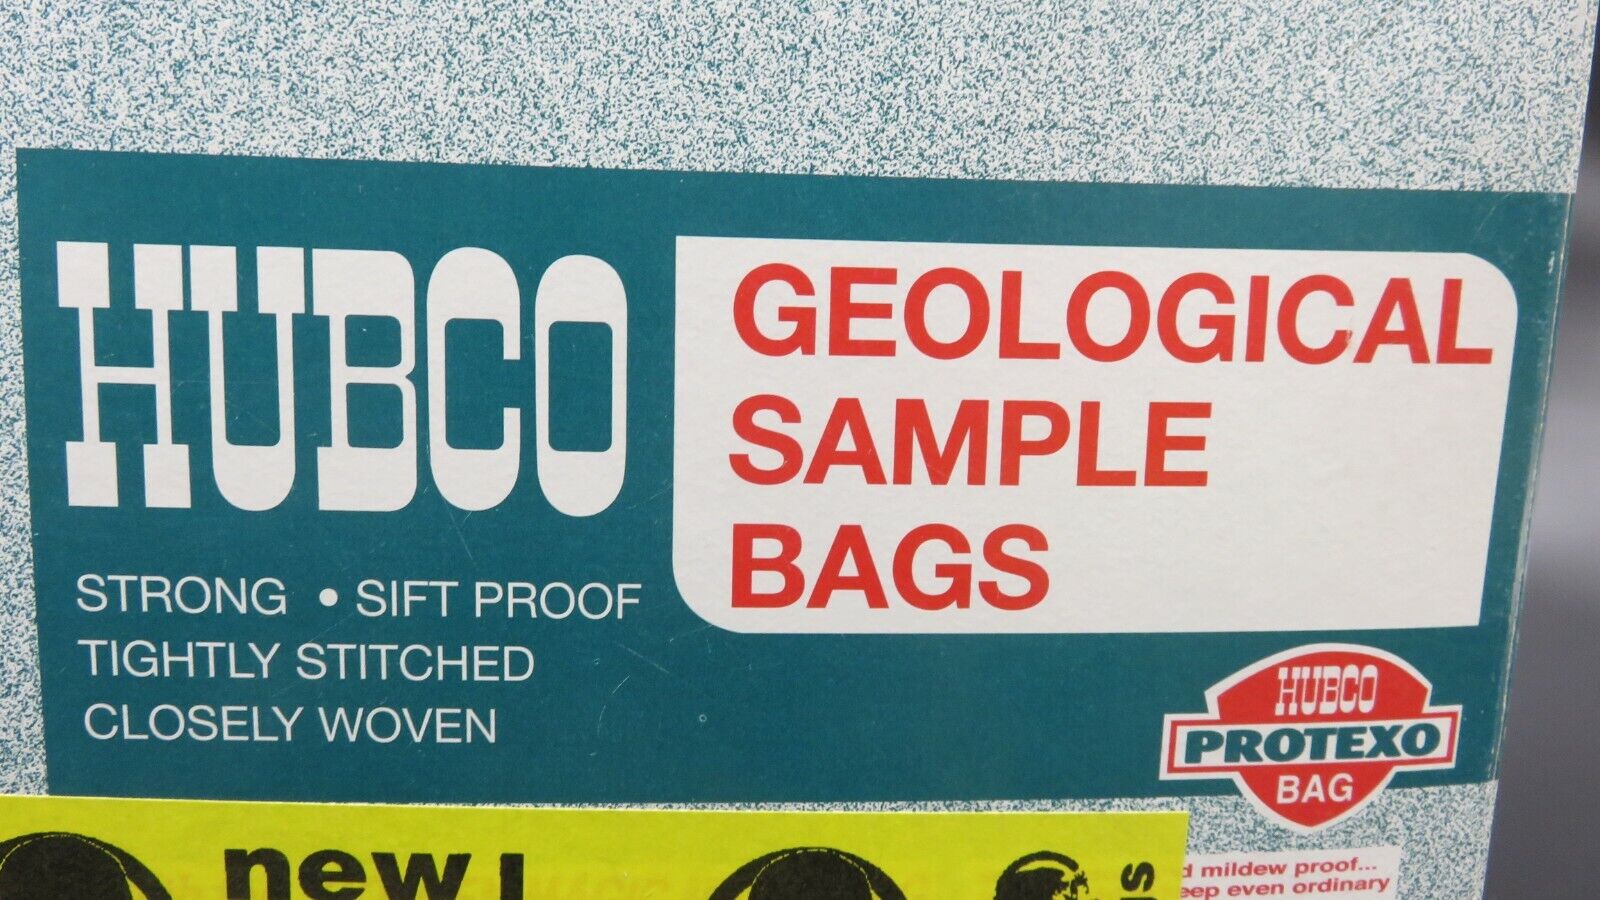 Hubco Geological Sample Bags 5.5\